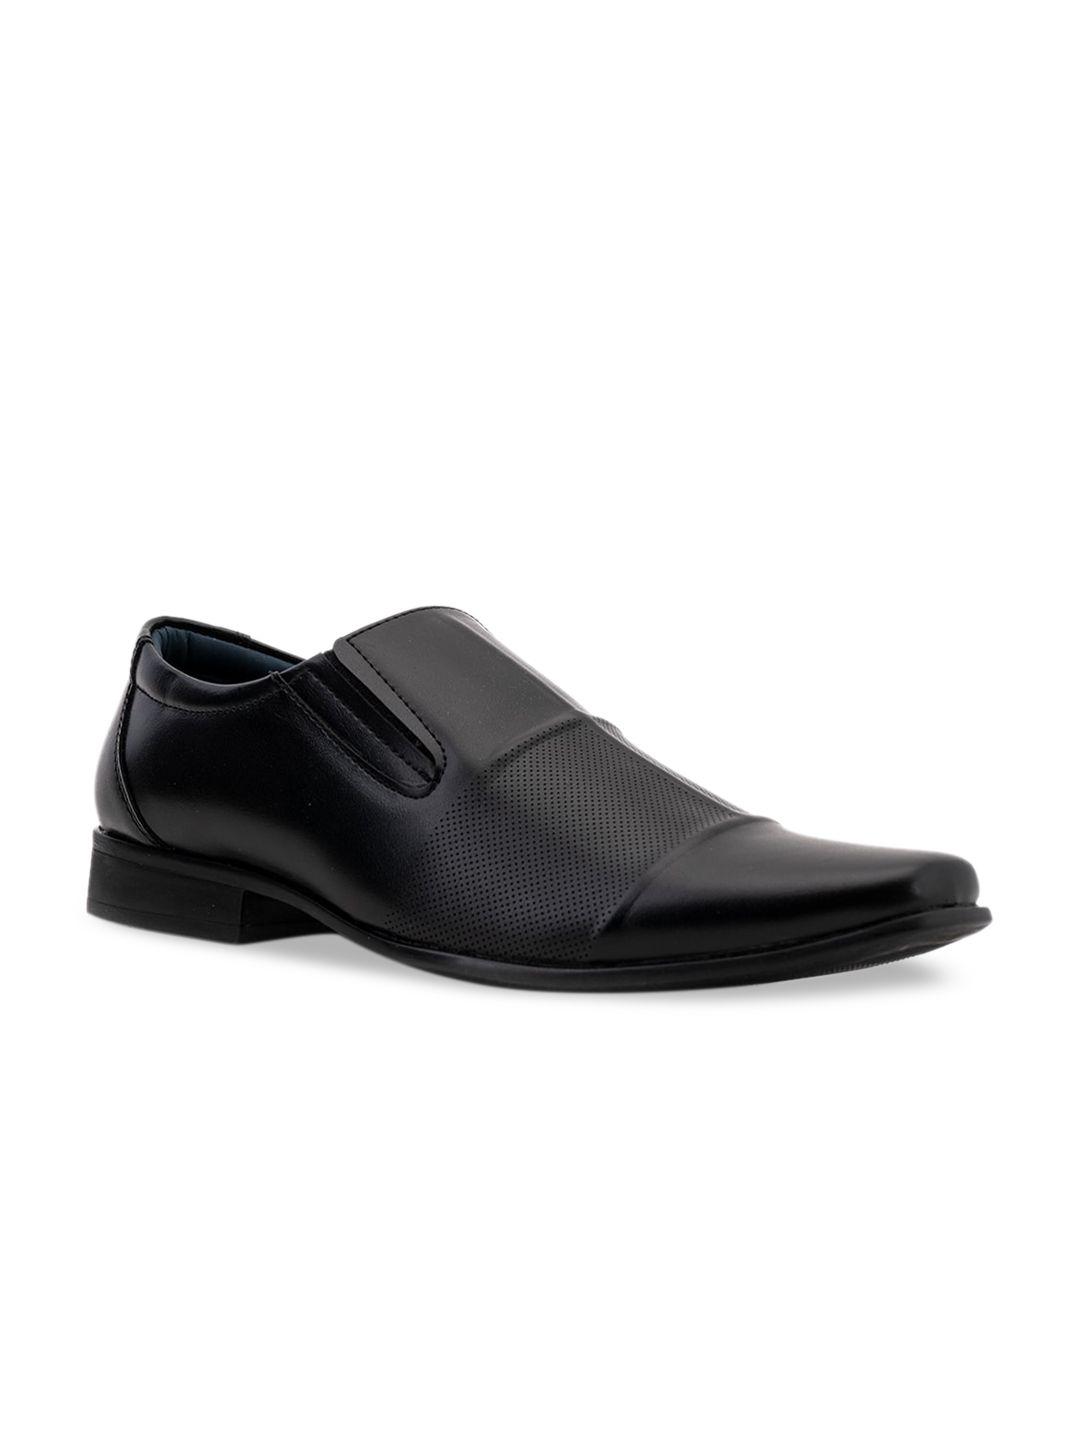 khadims-men-black-solid-formal-slip-on-shoes